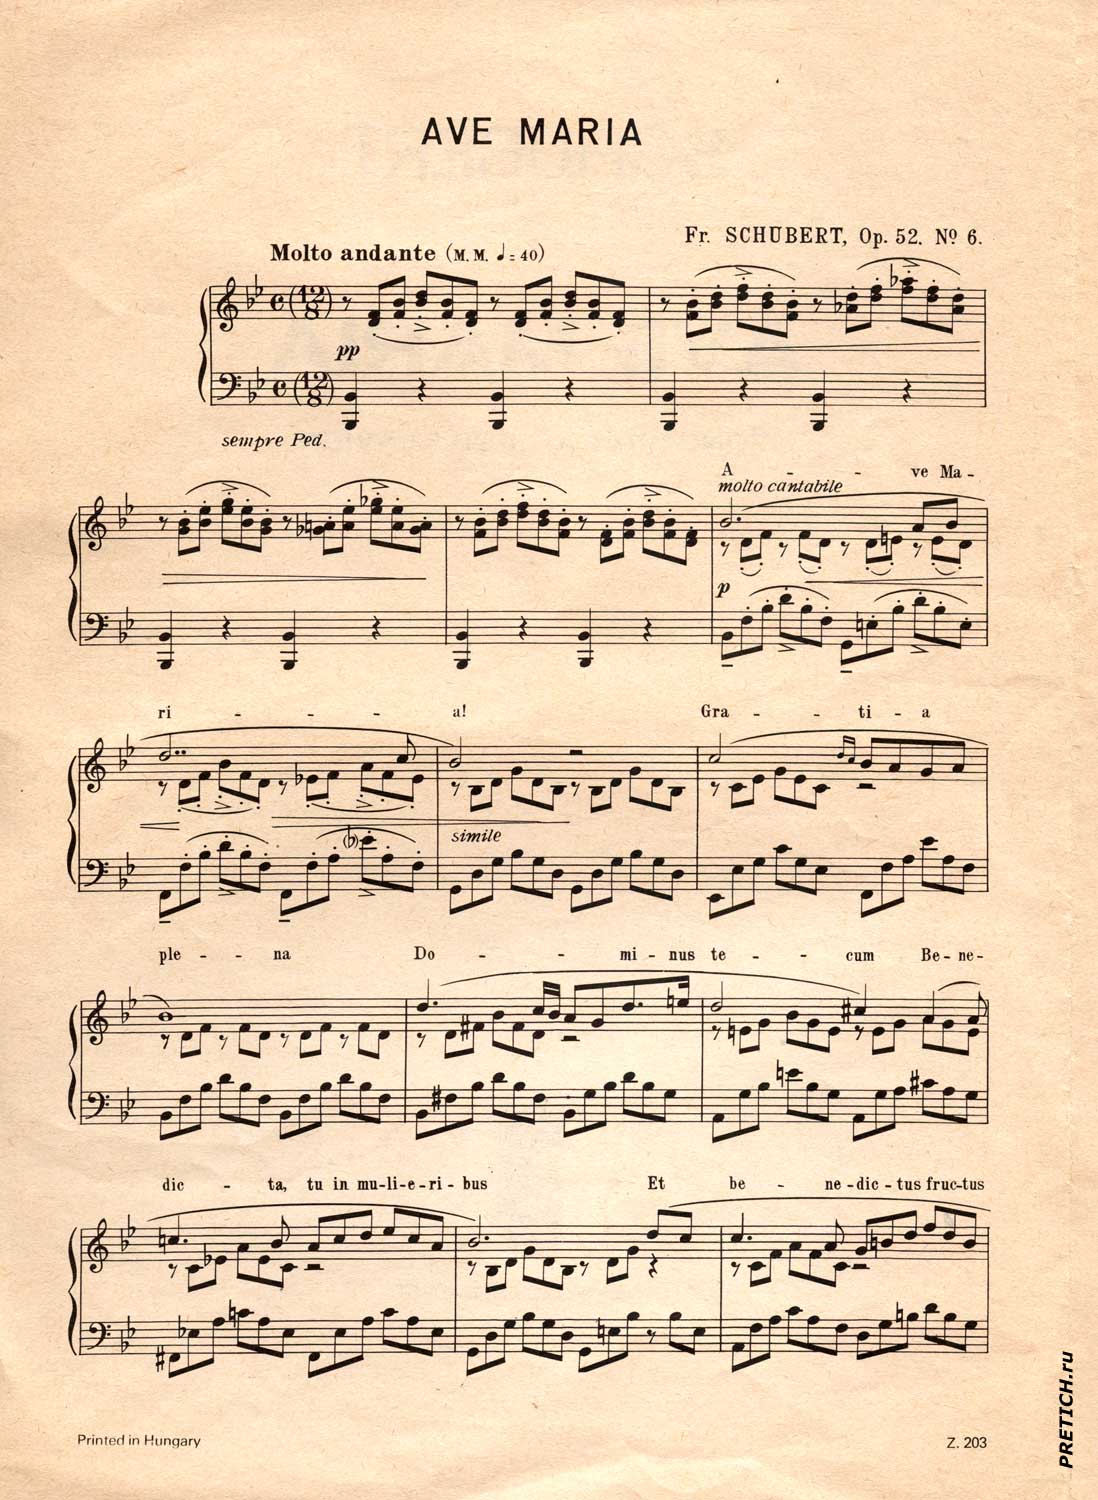 Schubert AVE MARIA Zongorara - fur klavier нотное издательство Будапешт